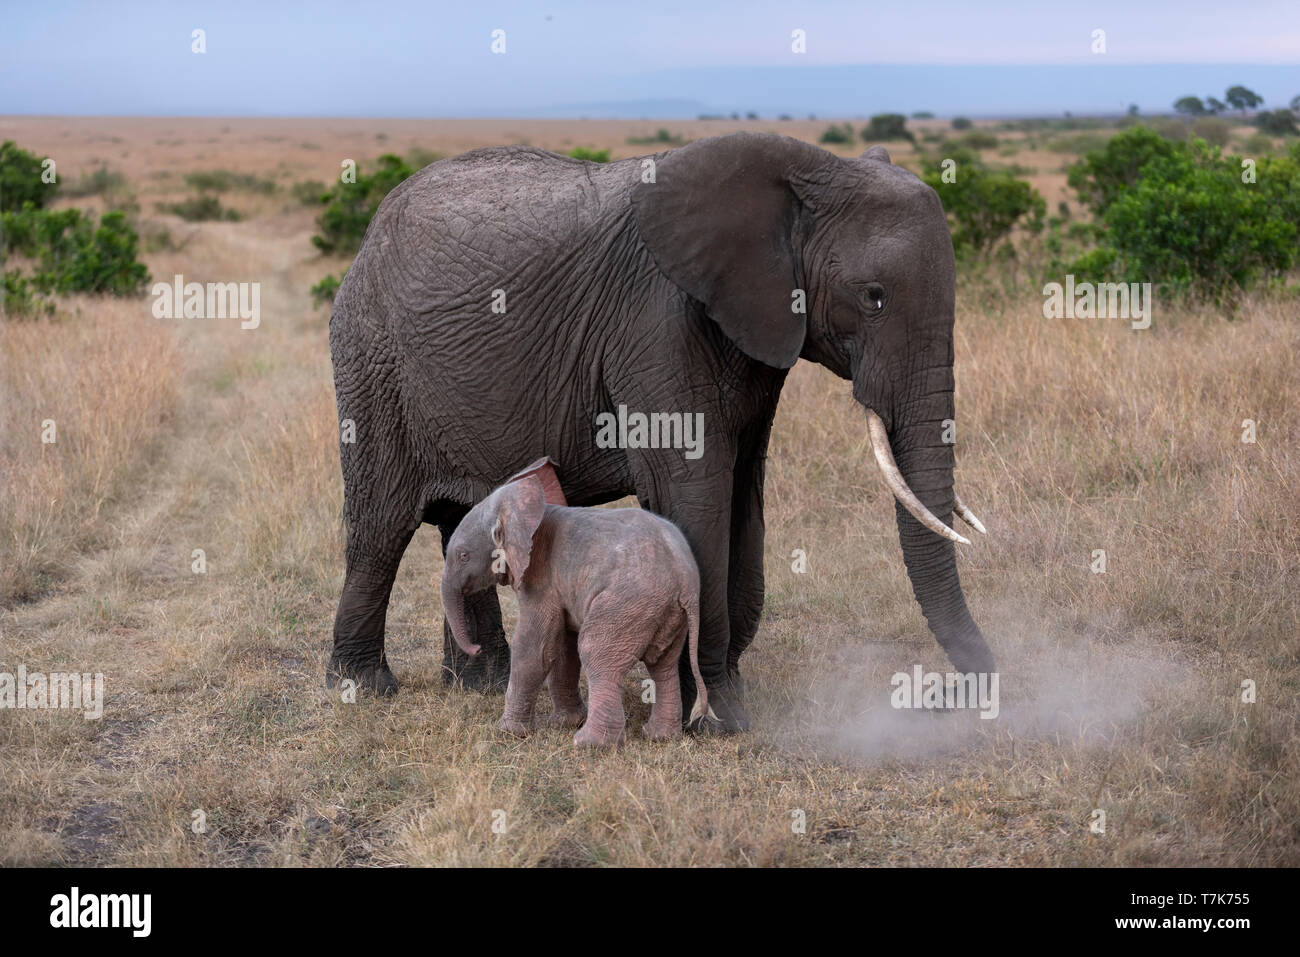 Rare Albino elephant born in masai mara national reserve in kenya Stock Photo